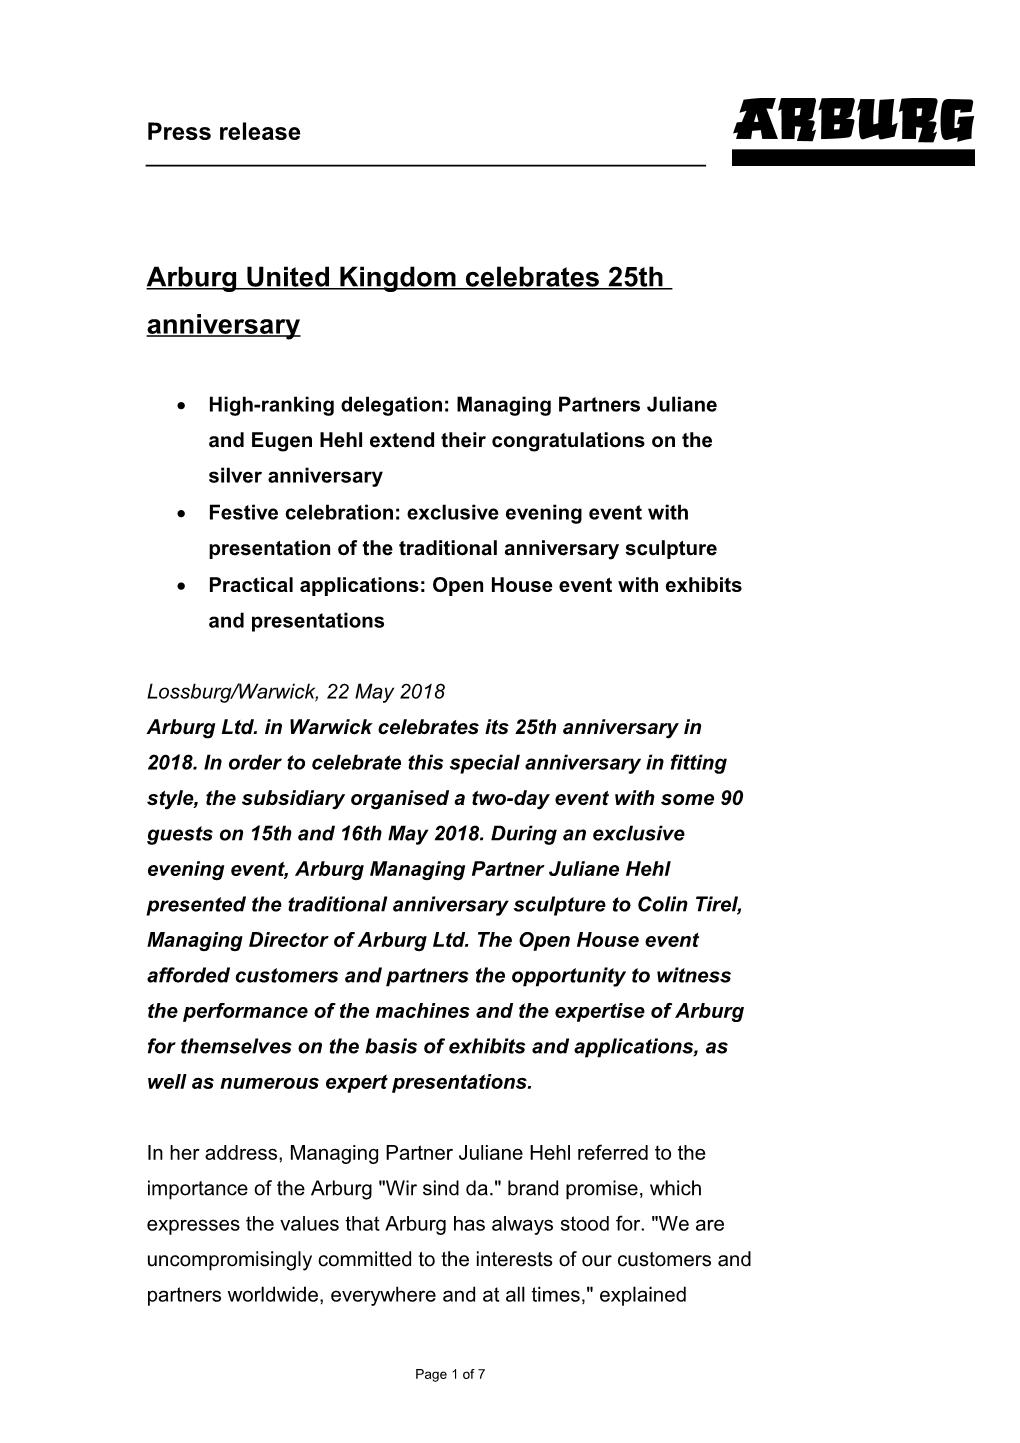 Arburg United Kingdom Celebrates 25Th Anniversary